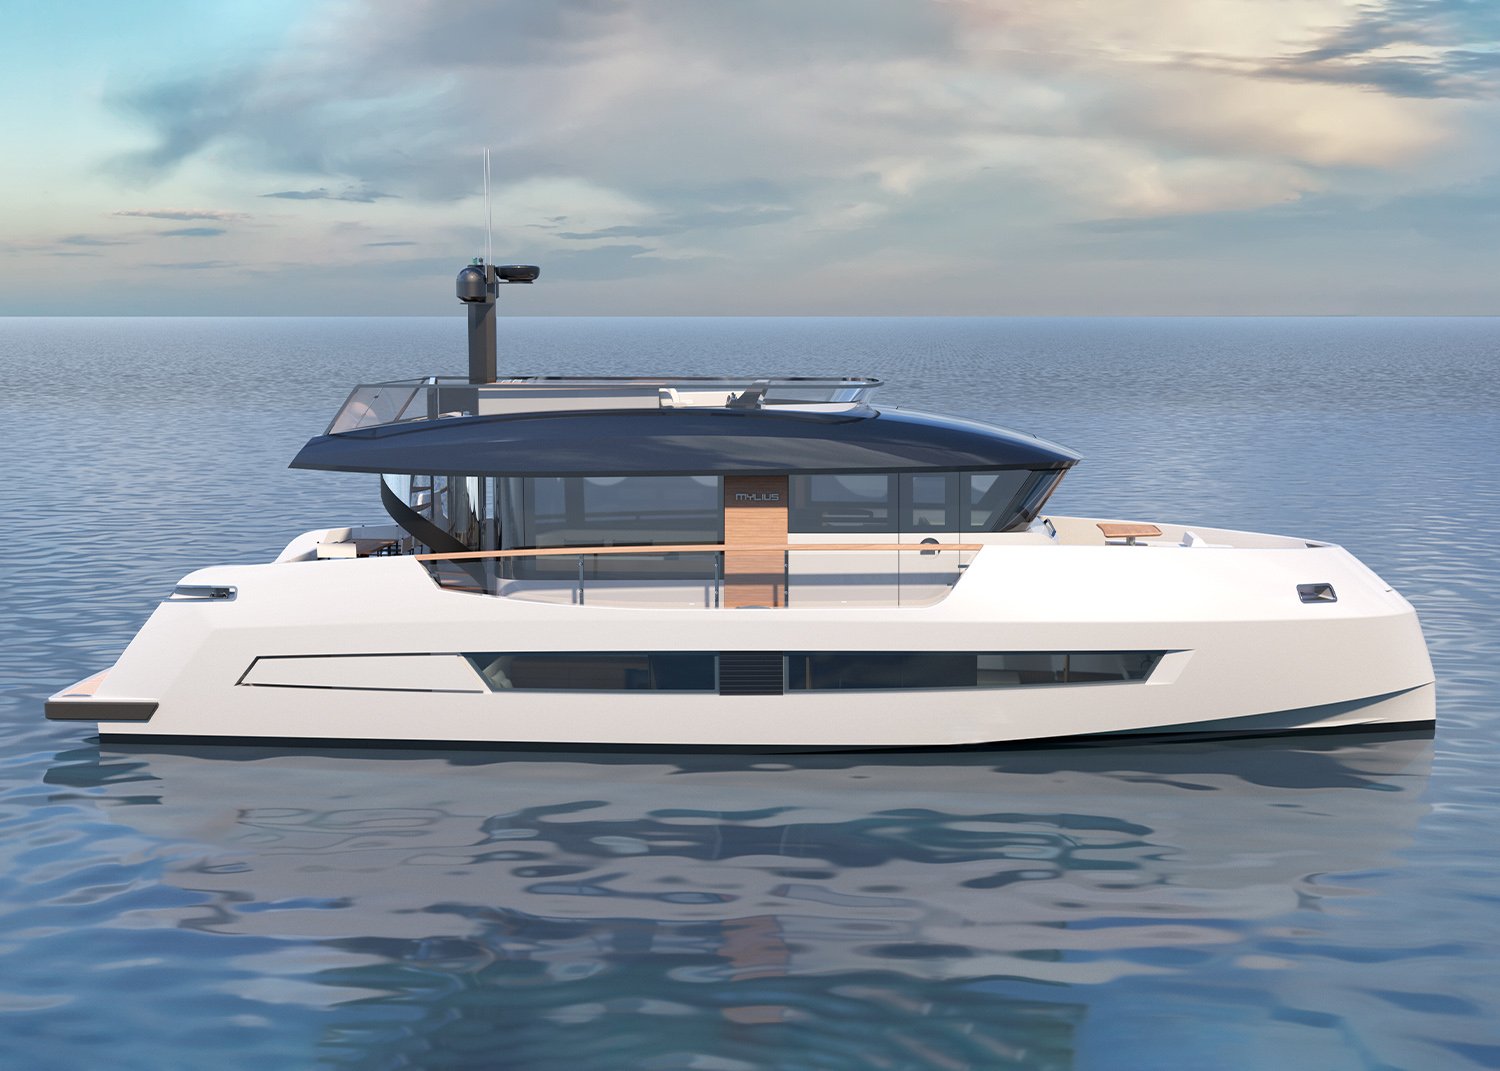 Mylius Yacht / Ceccarelli Yacht Design and Engineering / Parisotto + Formenton Architetti